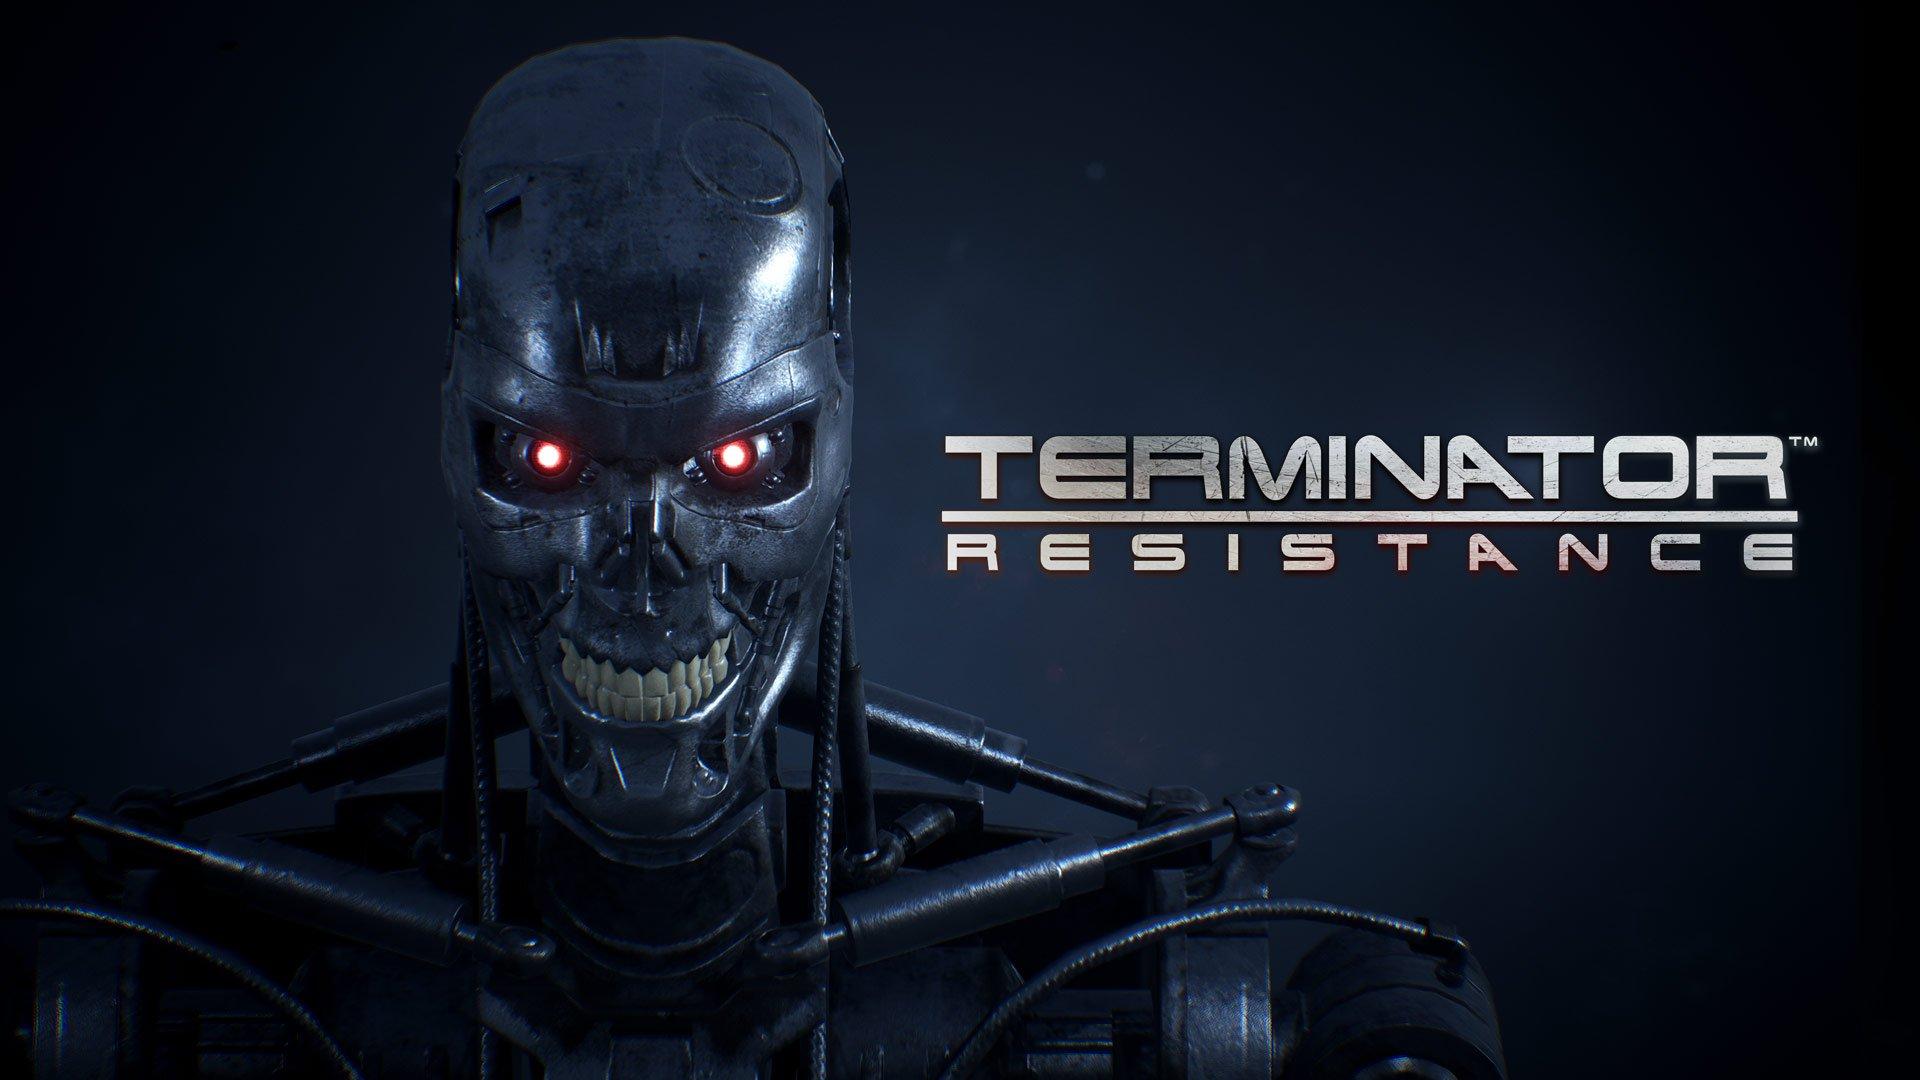 Terminator annihilation line. Игра Терминатор резистанс. Т-850 Terminator Resistance. Terminator игра 2019. Т-800 Терминатор в играх.